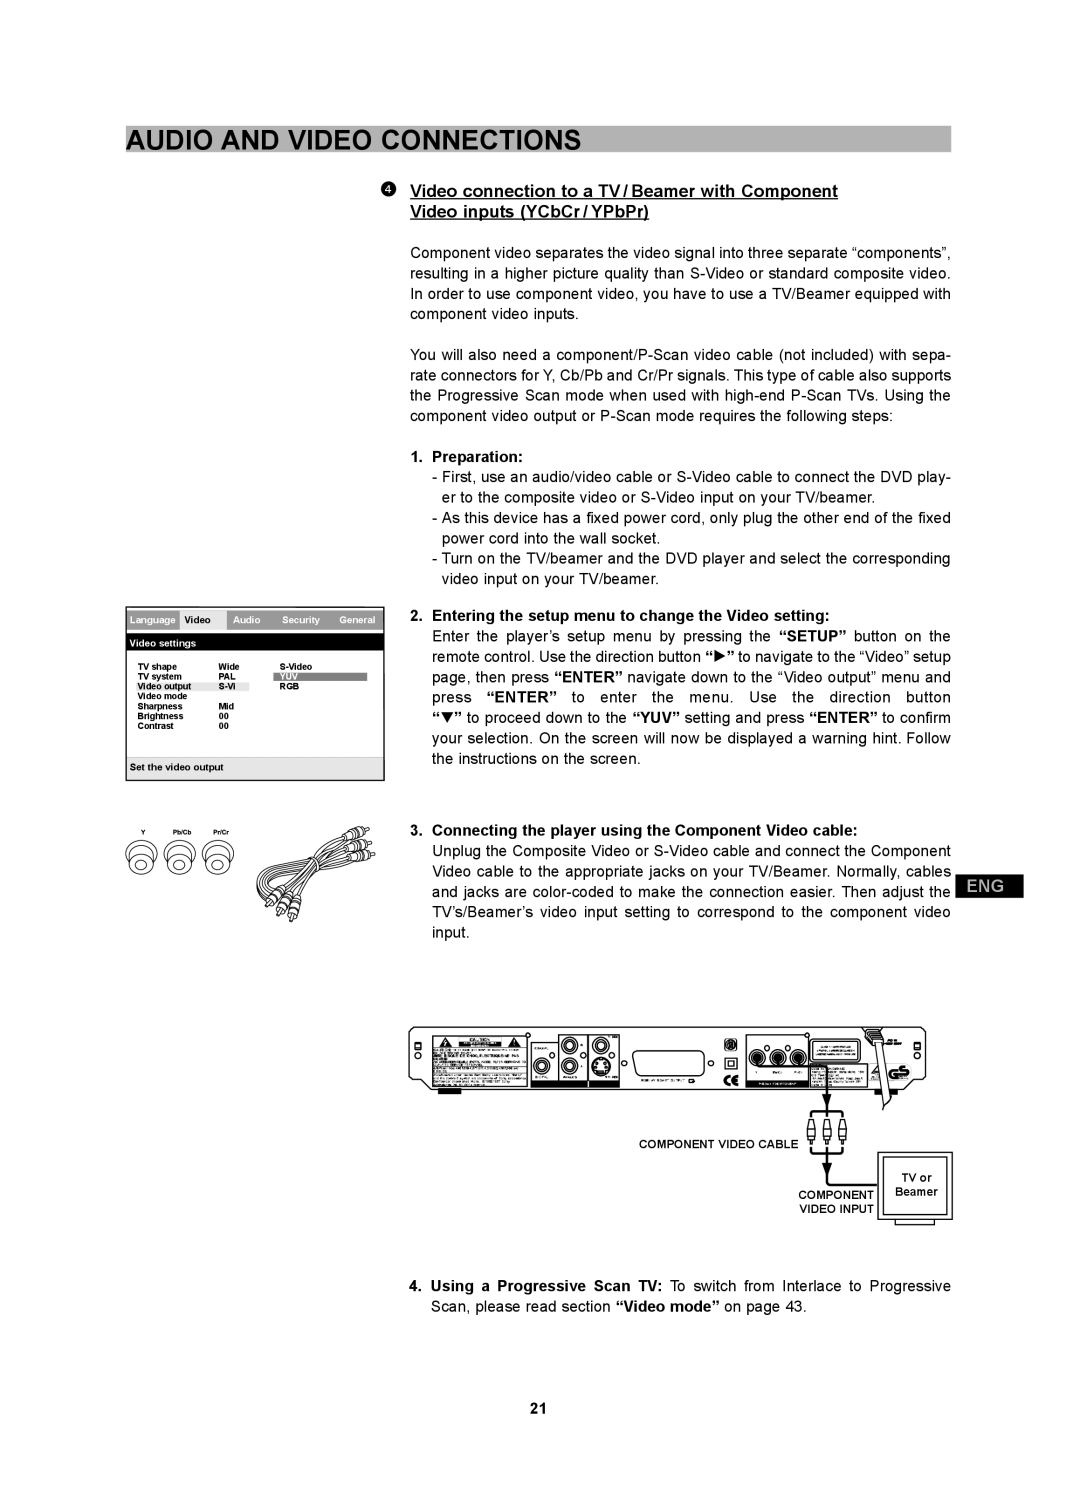 CyberHome Entertainment CH-DVD 452 manual Preparation, Entering the setup menu to change the Video setting 